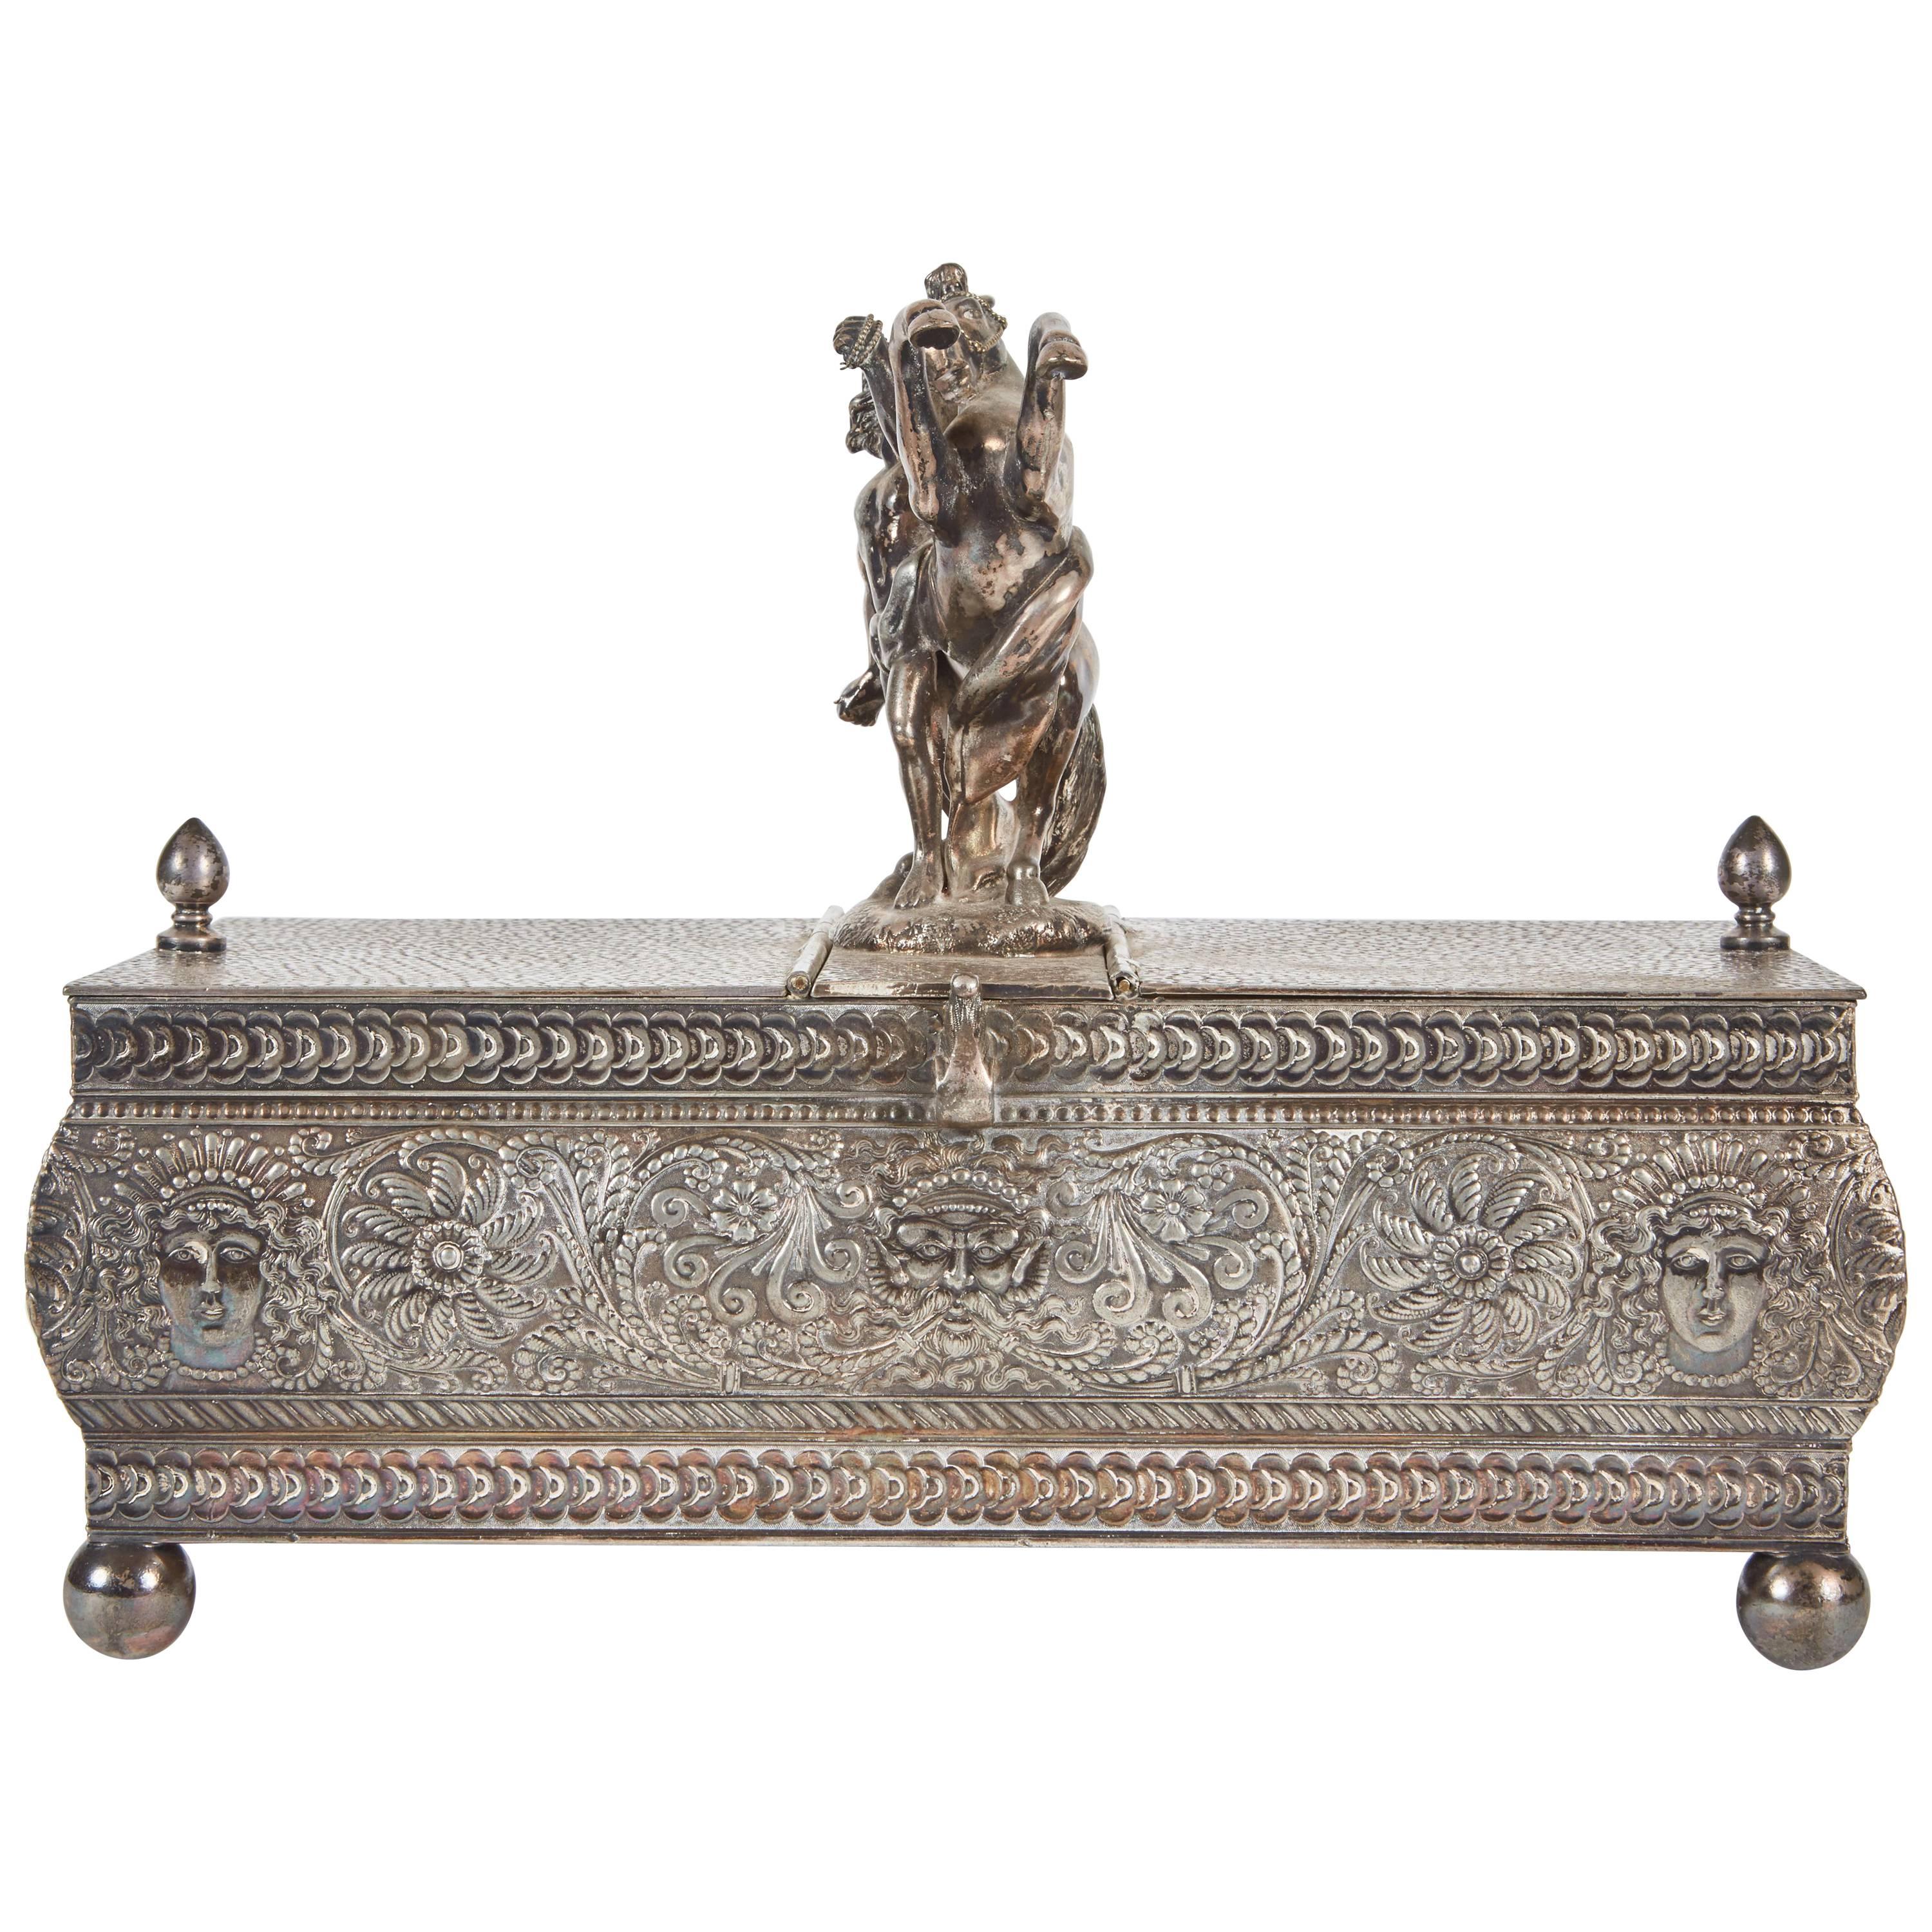 Fine 19th Century Italian Silver-Plated Humidor